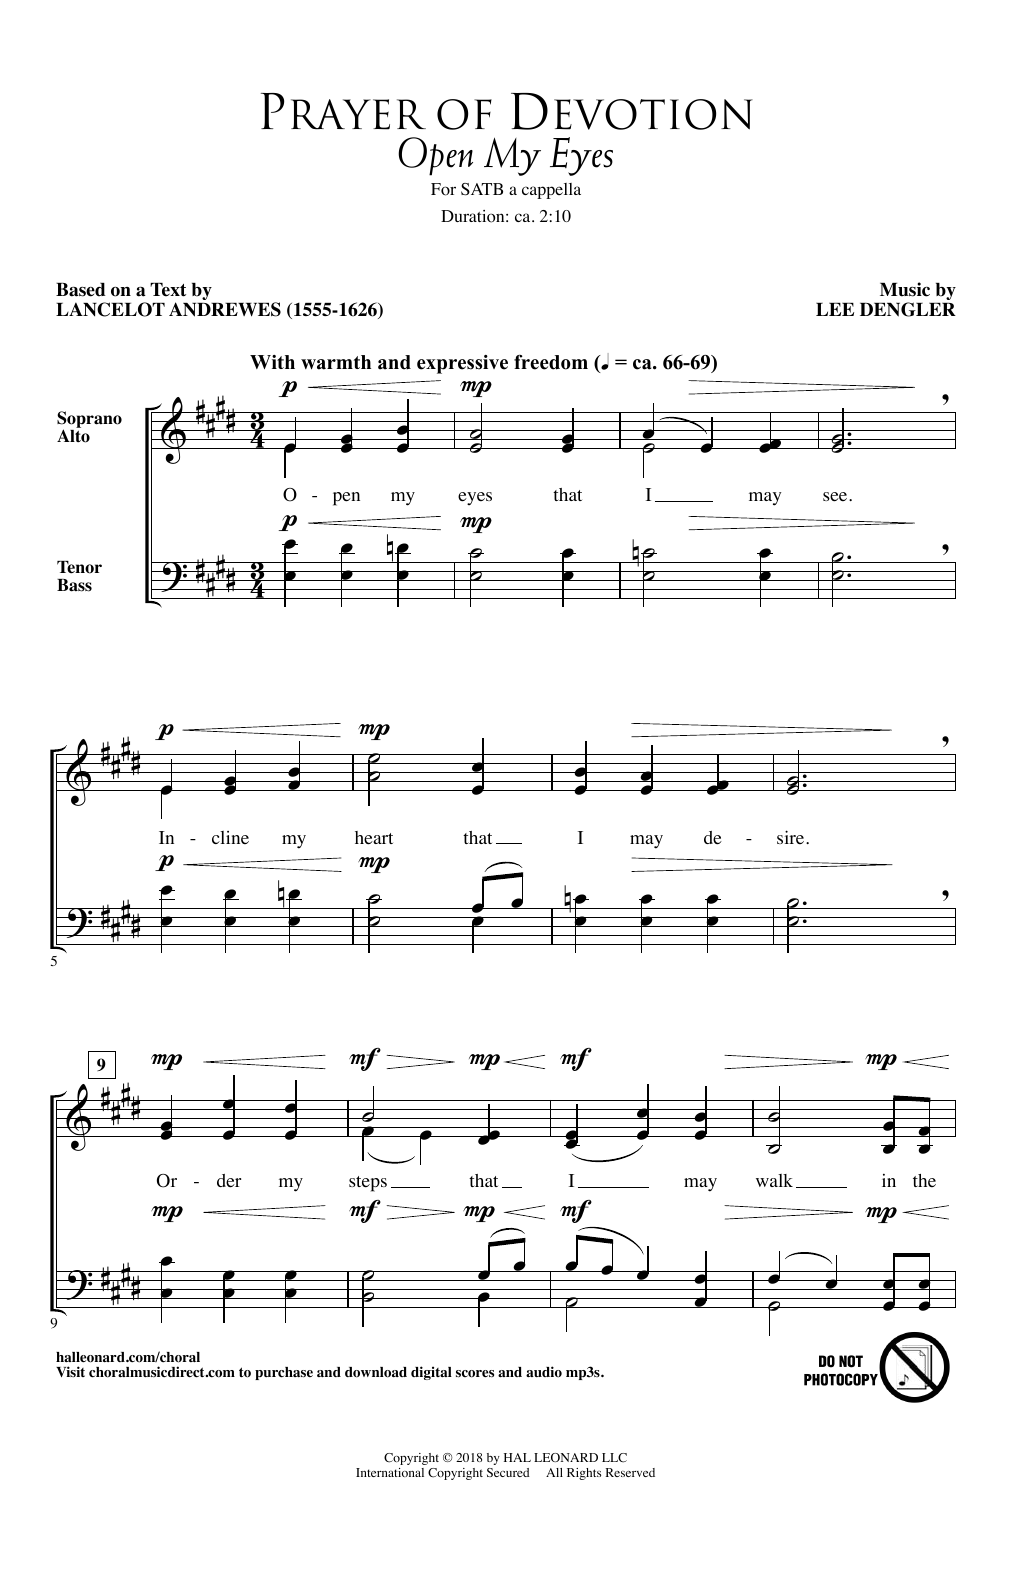 Lee Dengler Prayer Of Devotion (Open My Eyes) Sheet Music Notes & Chords for SATB - Download or Print PDF